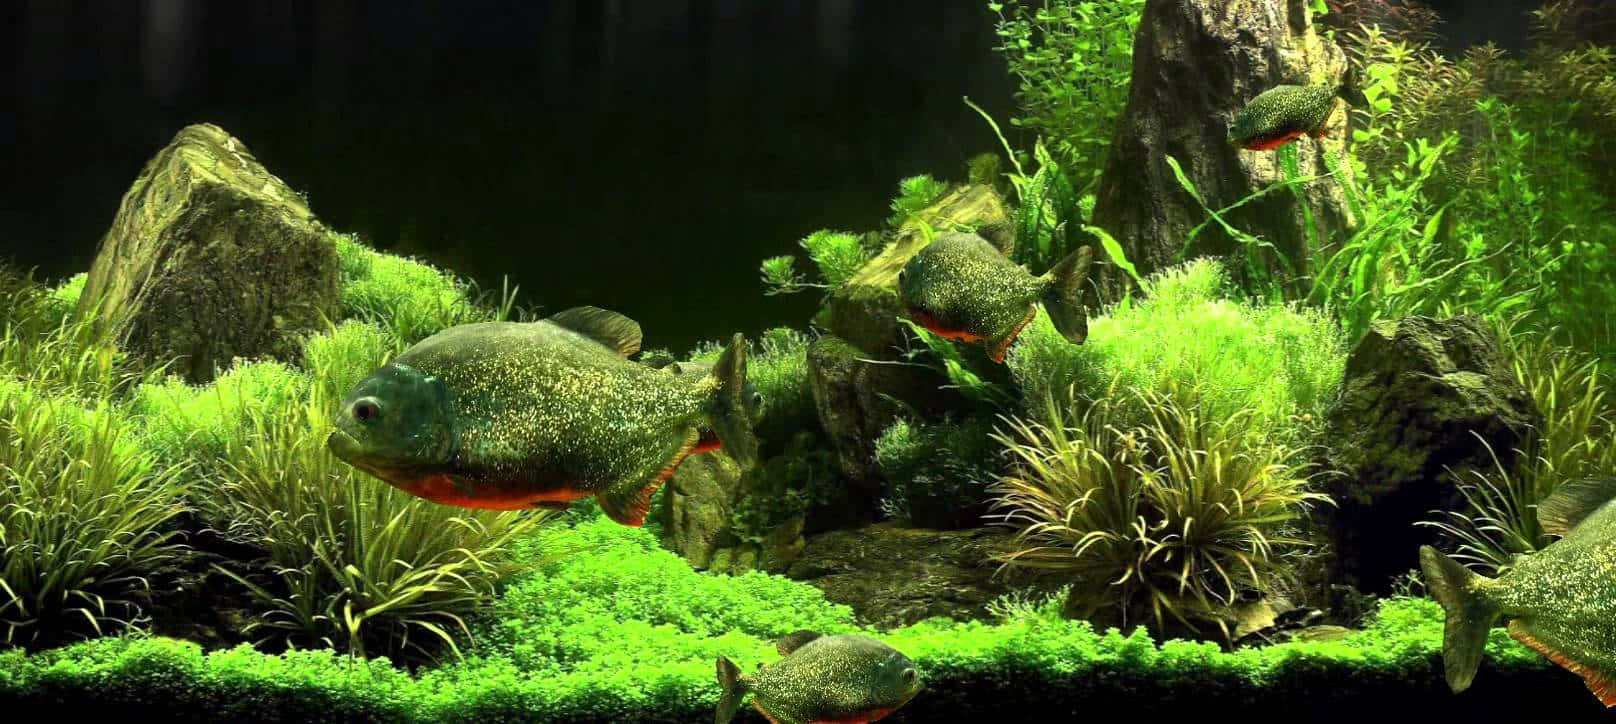 Red-Bellied Piranhas Fish Tank Background